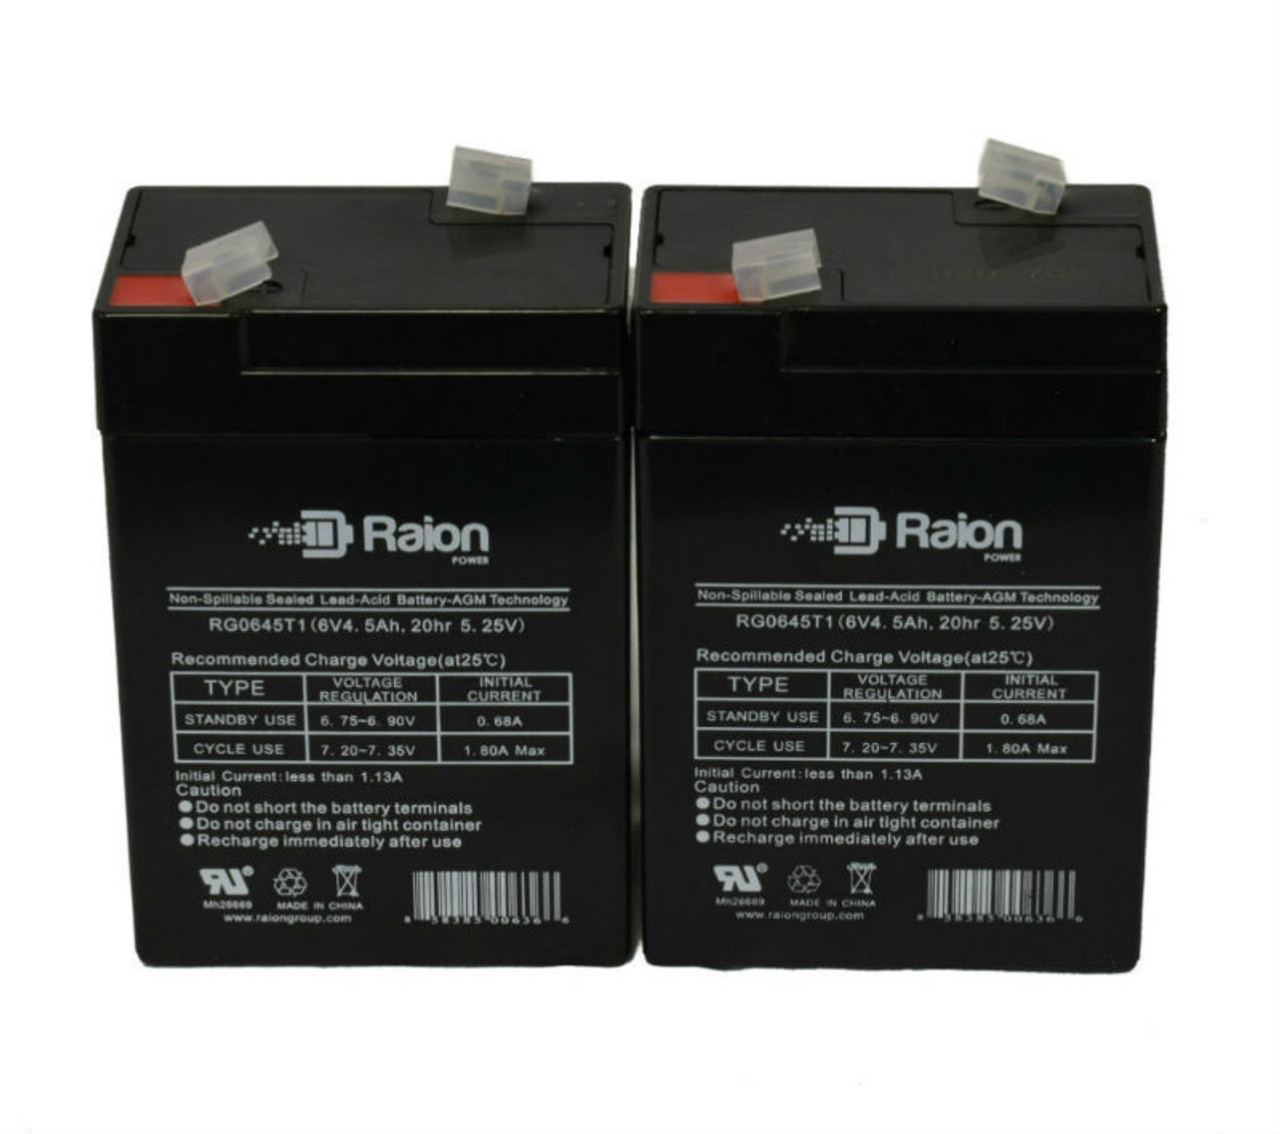 Raion Power 6 Volt 4.5Ah RG0645T1 Replacement Spotlight Battery for Cyclops Spotlight No. 158611 10 Million - 2 Pack